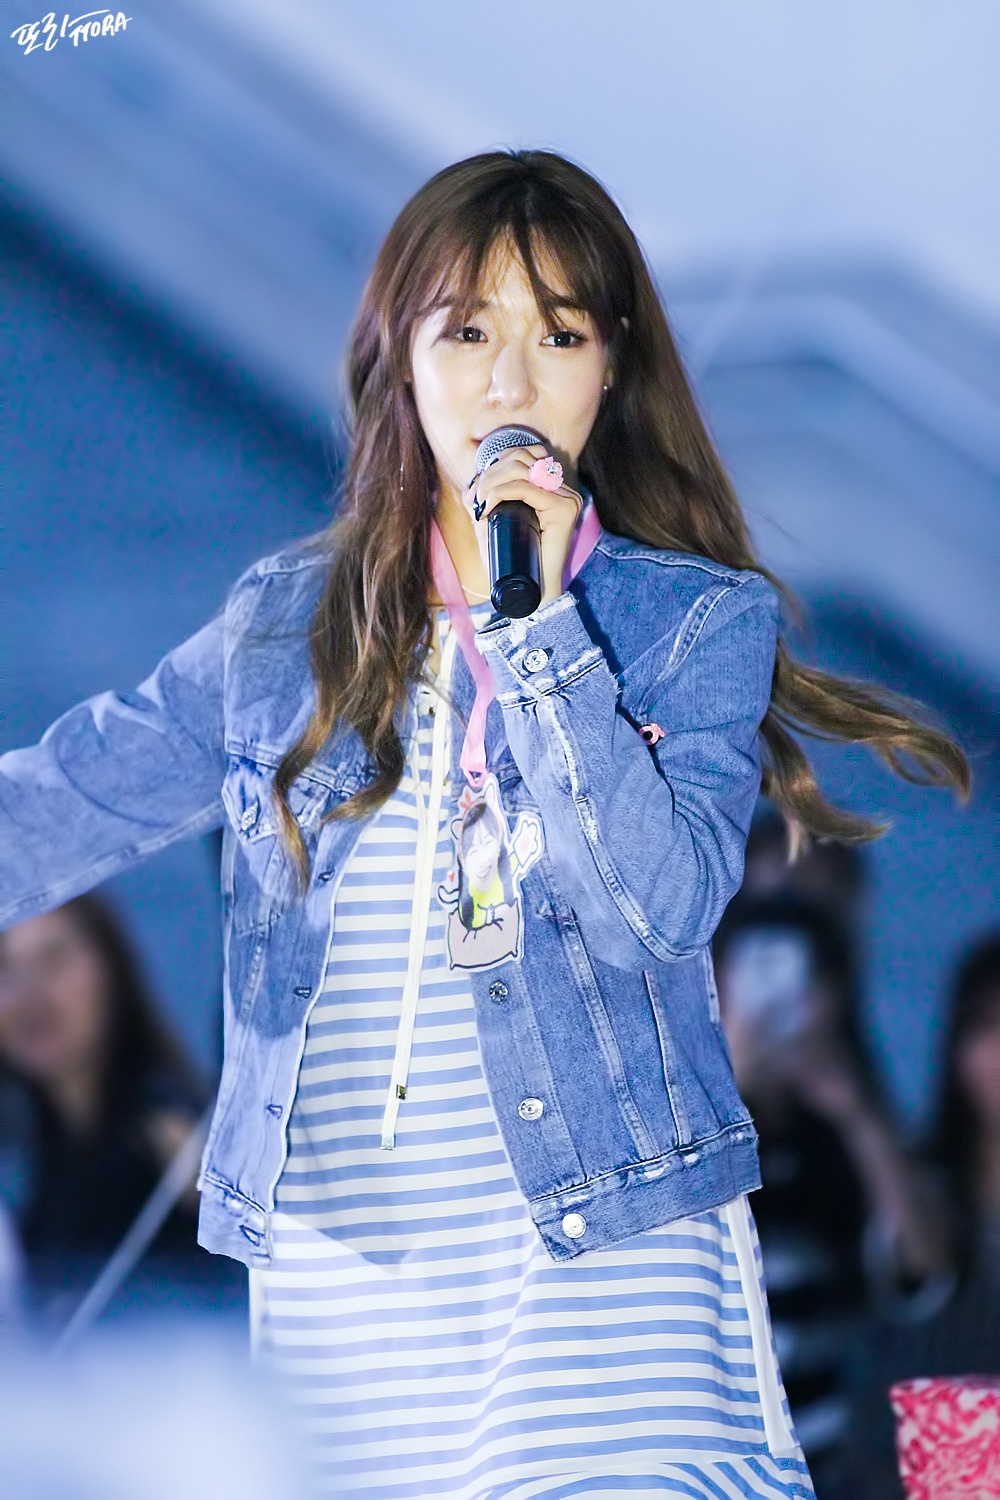 [PIC][06-06-2016]Tiffany tham dự buổi Fansign cho "I Just Wanna Dance" tại Busan vào chiều nay - Page 5 2337944257CEB45233E740